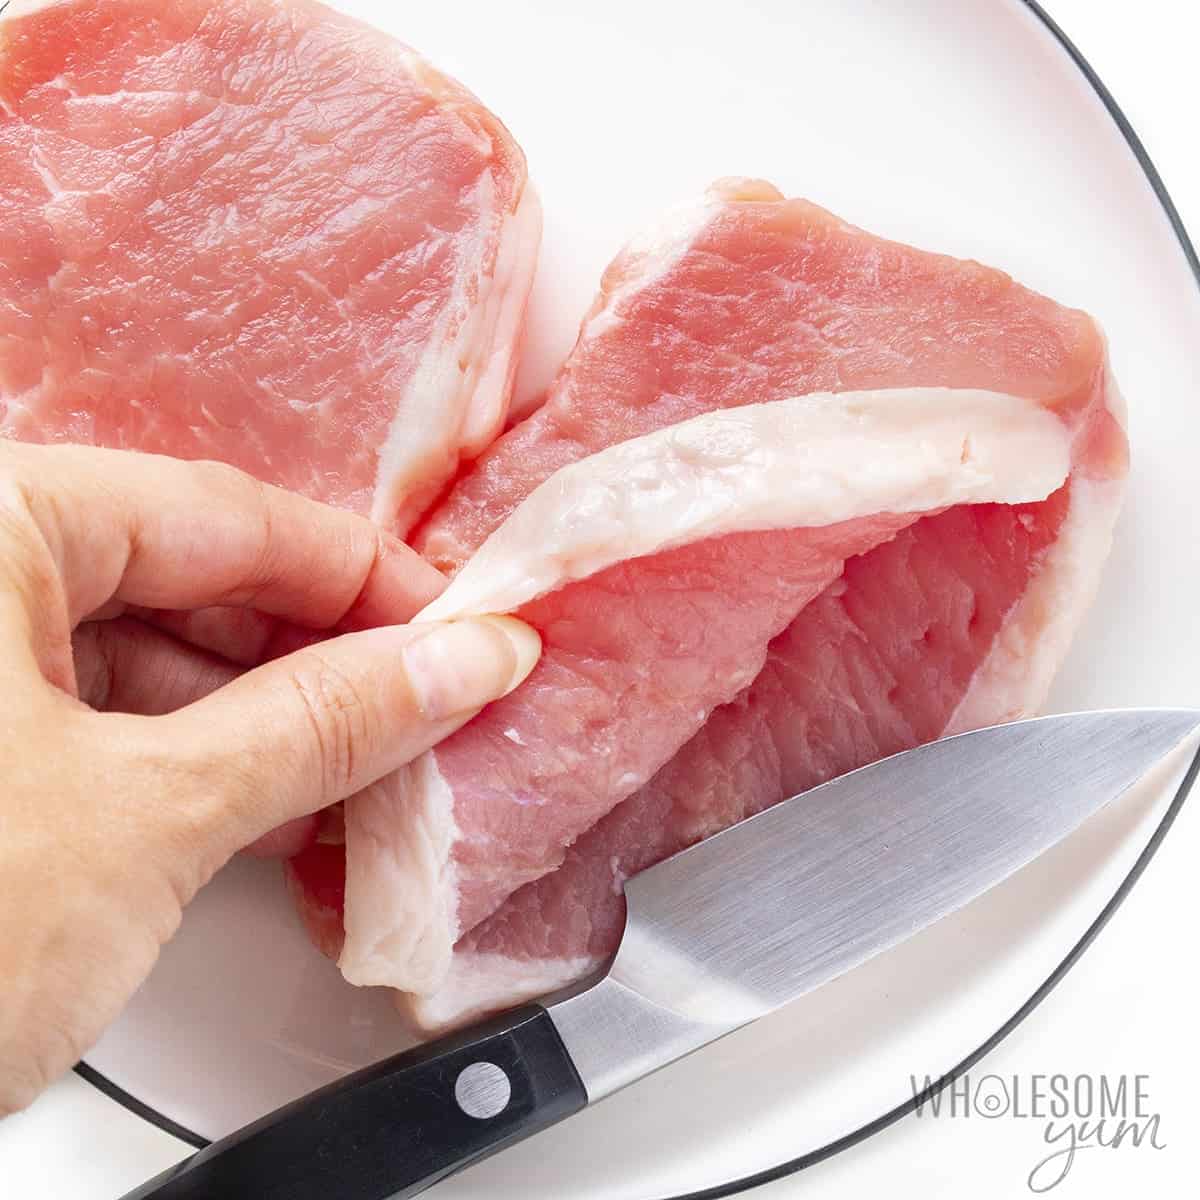 Pork chop with knife creating a pocket.